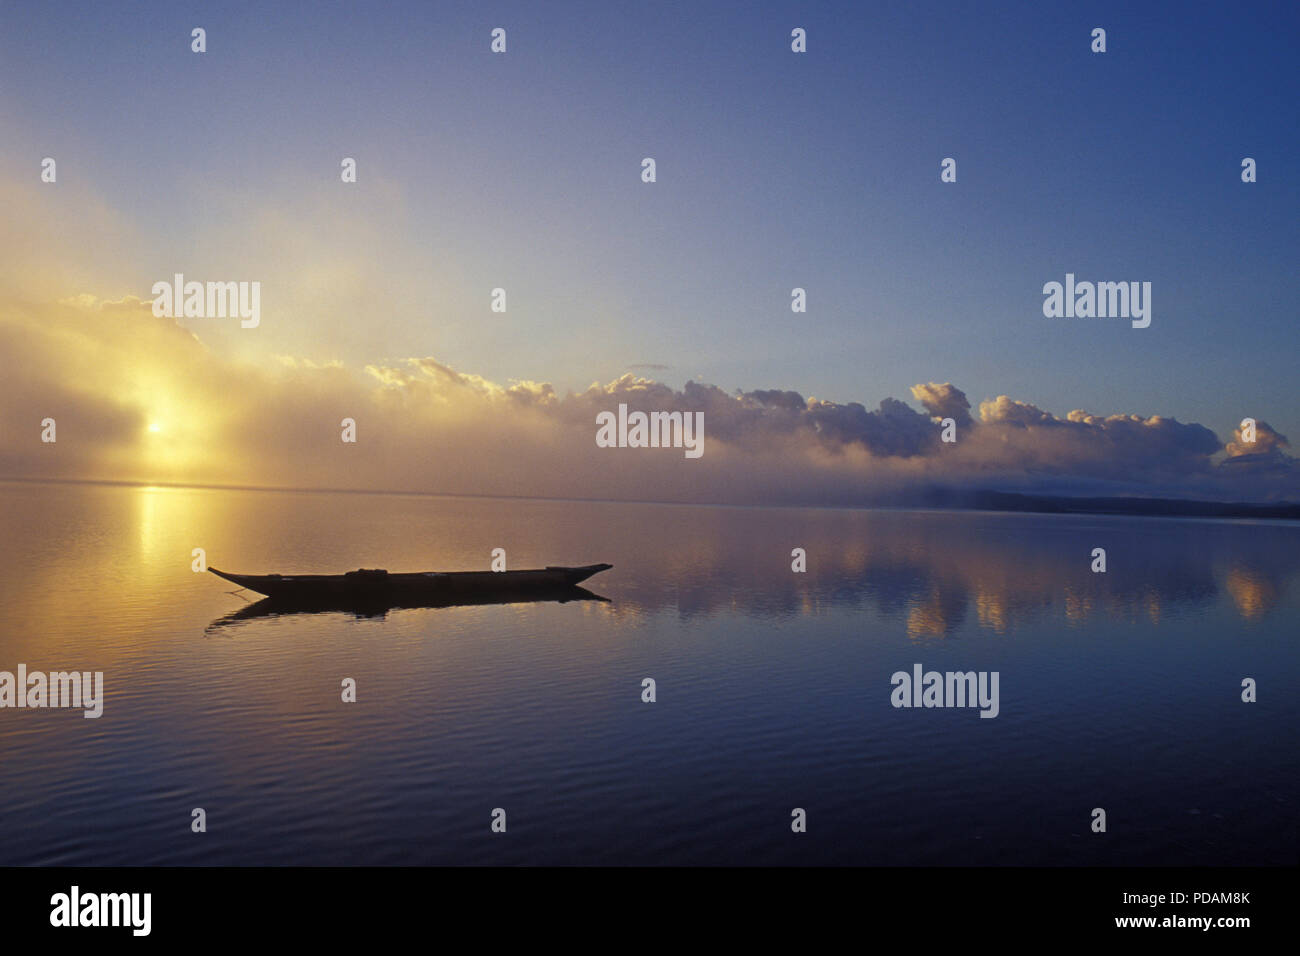 Fishing boat, silhouette of canoe in sunrise, quiet sea landscape, morning mist dissipating. Bahia State, Brazil. Stock Photo